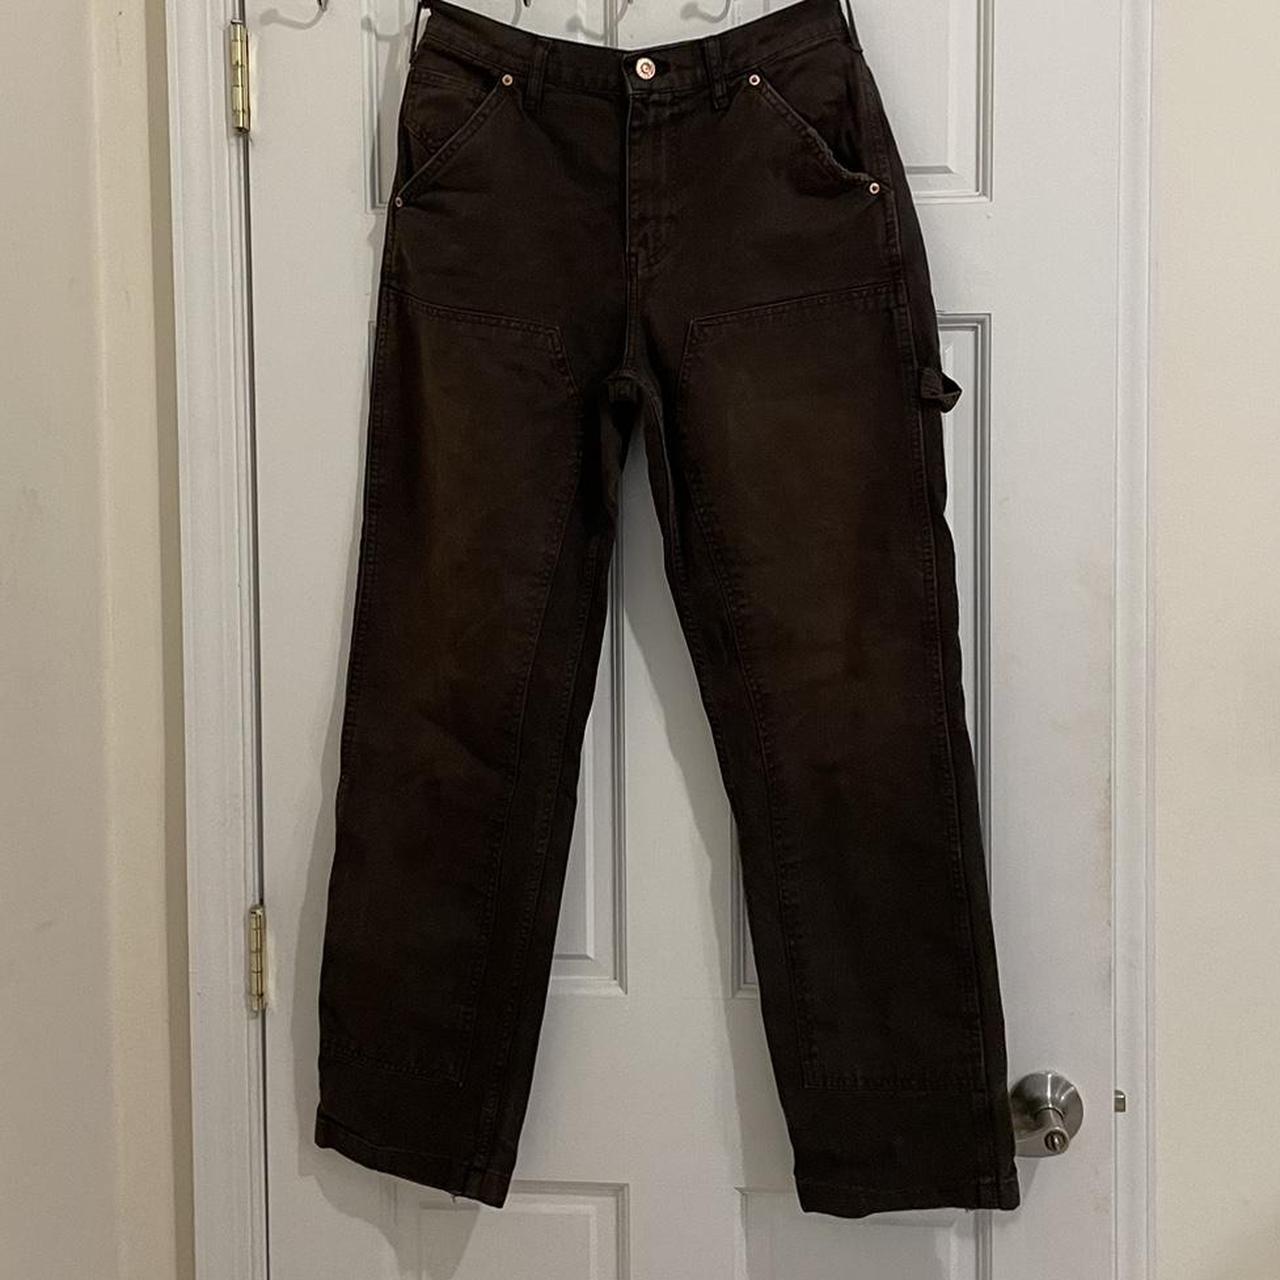 BDG denim workwear pants in size 29 x 32, waist fits... - Depop